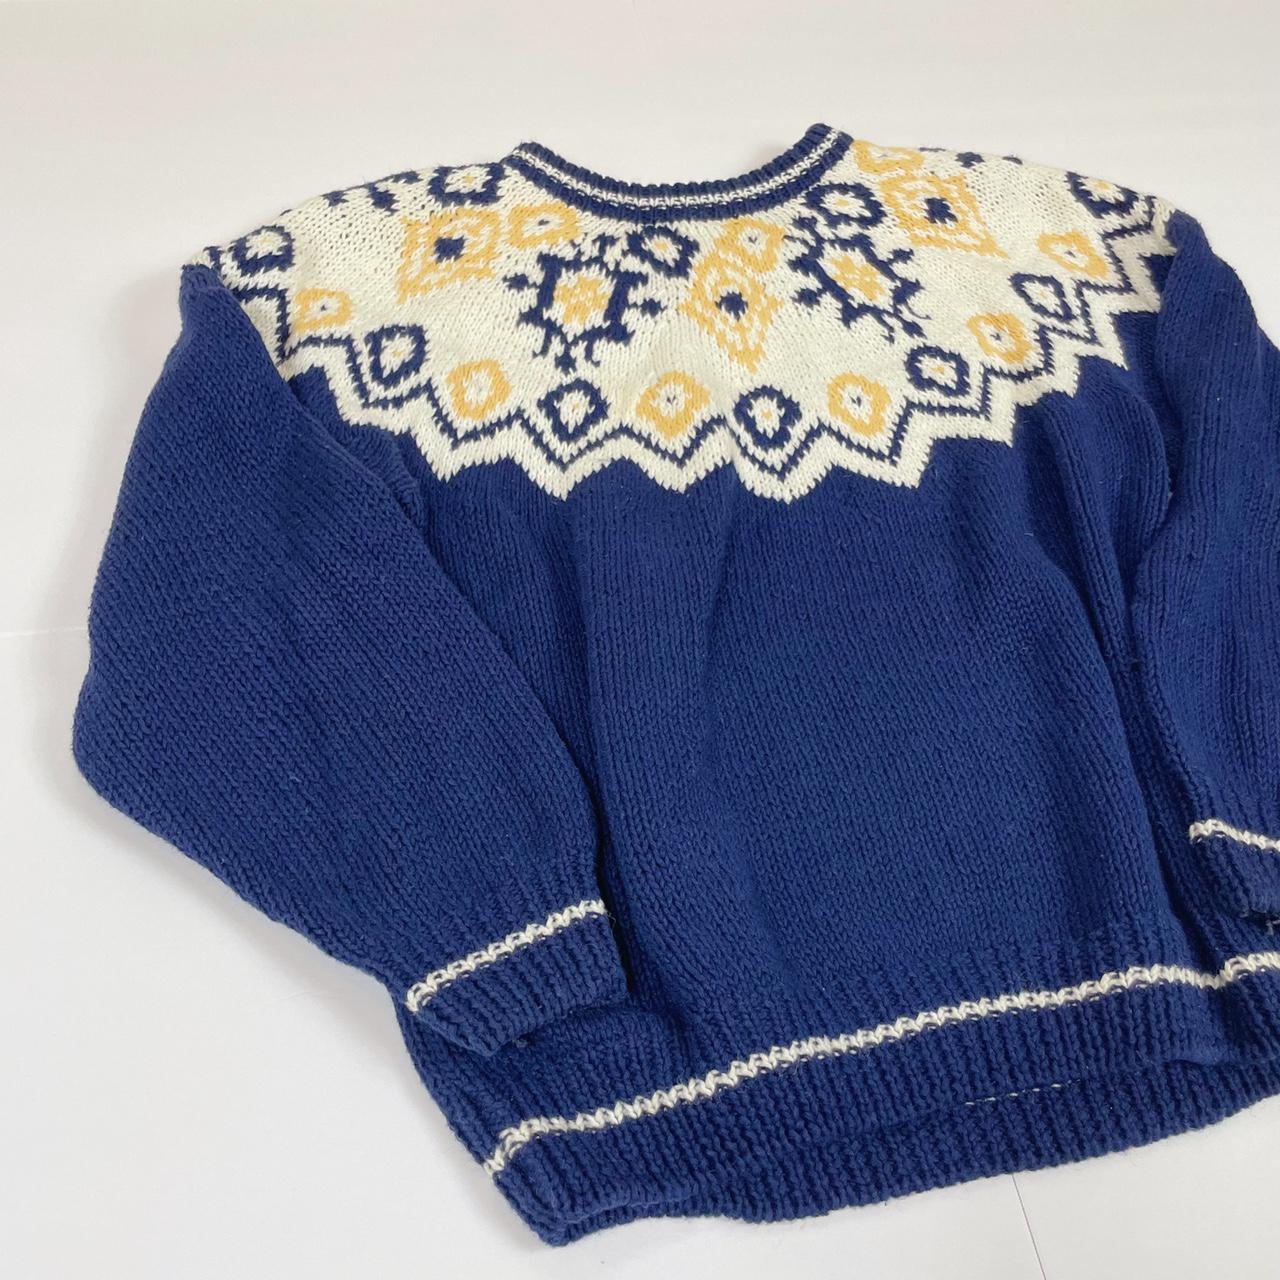 Product Image 1 - Cambridge Navy Blue/Yellow Sweater
Long sleeve